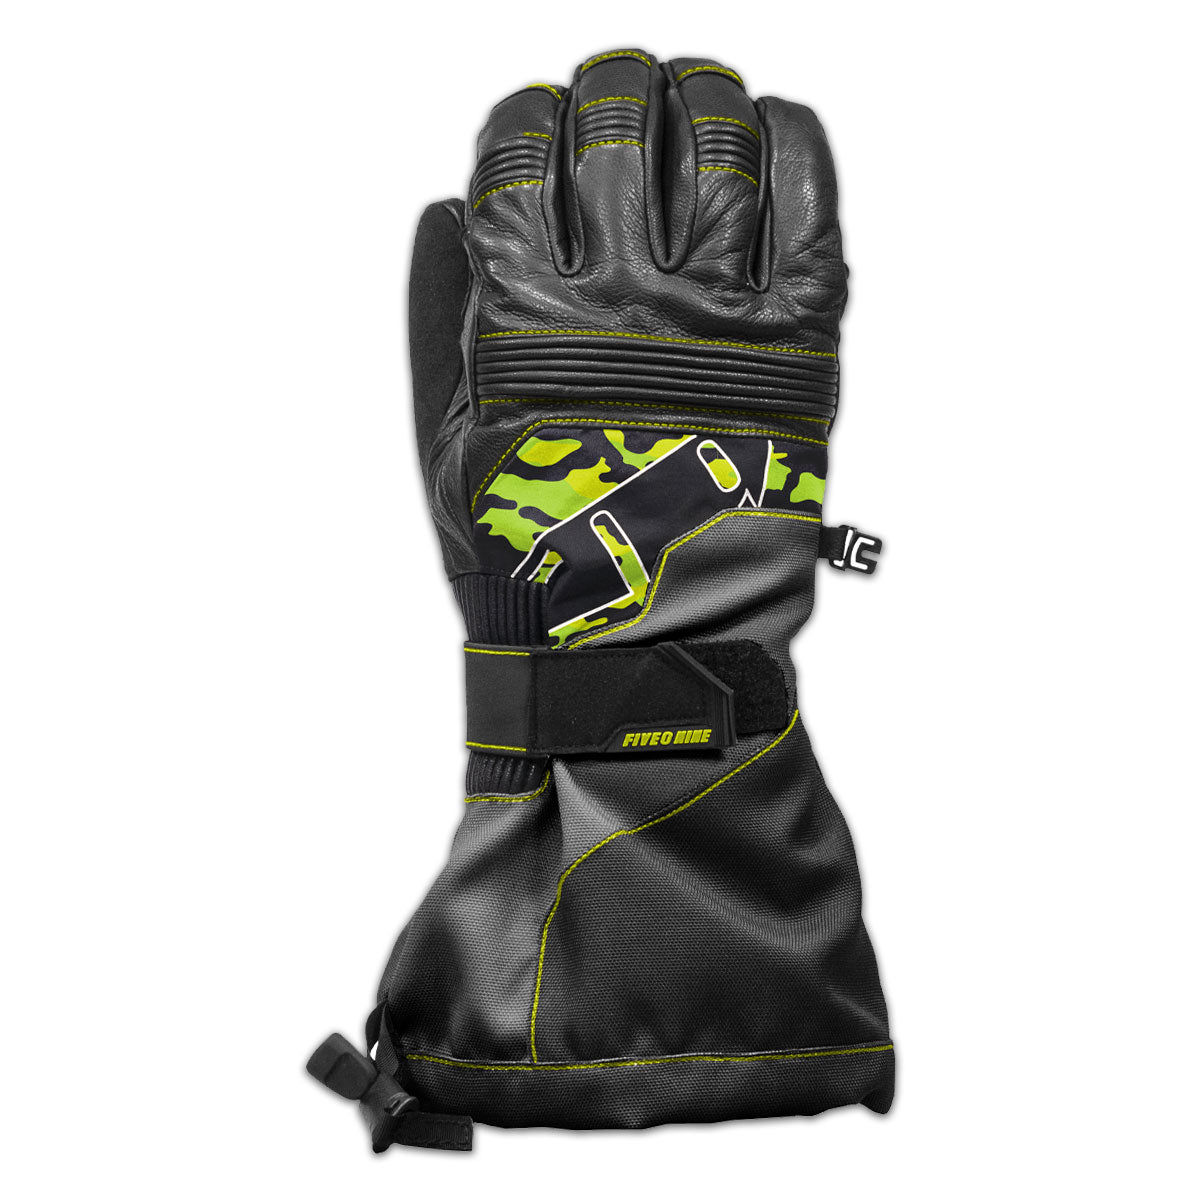 Range Insulated Gloves - Covert Camo / XS